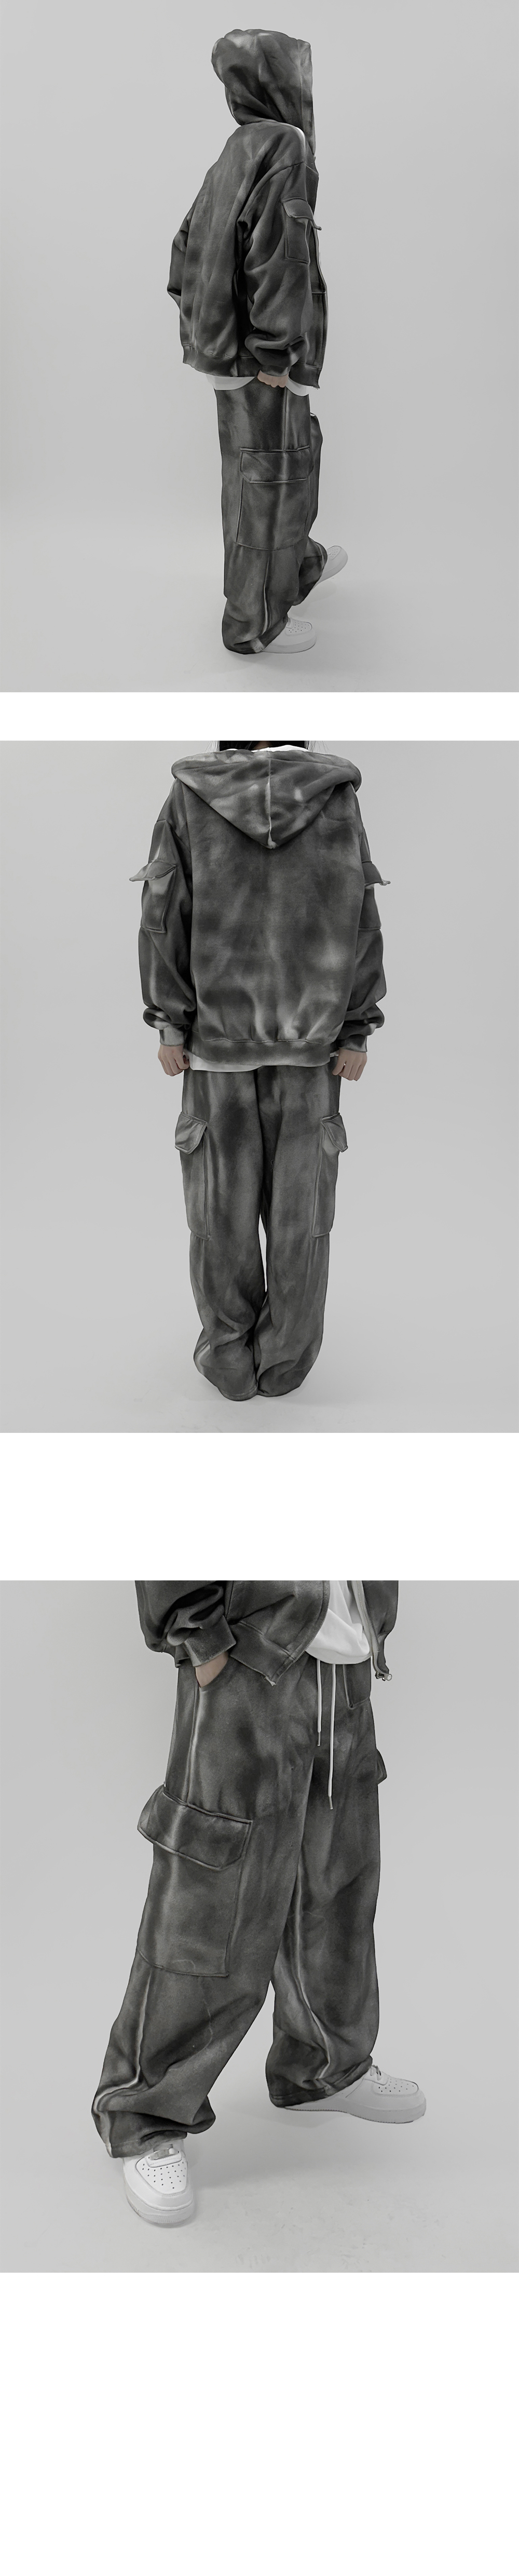 jacket grey color image-S1L23